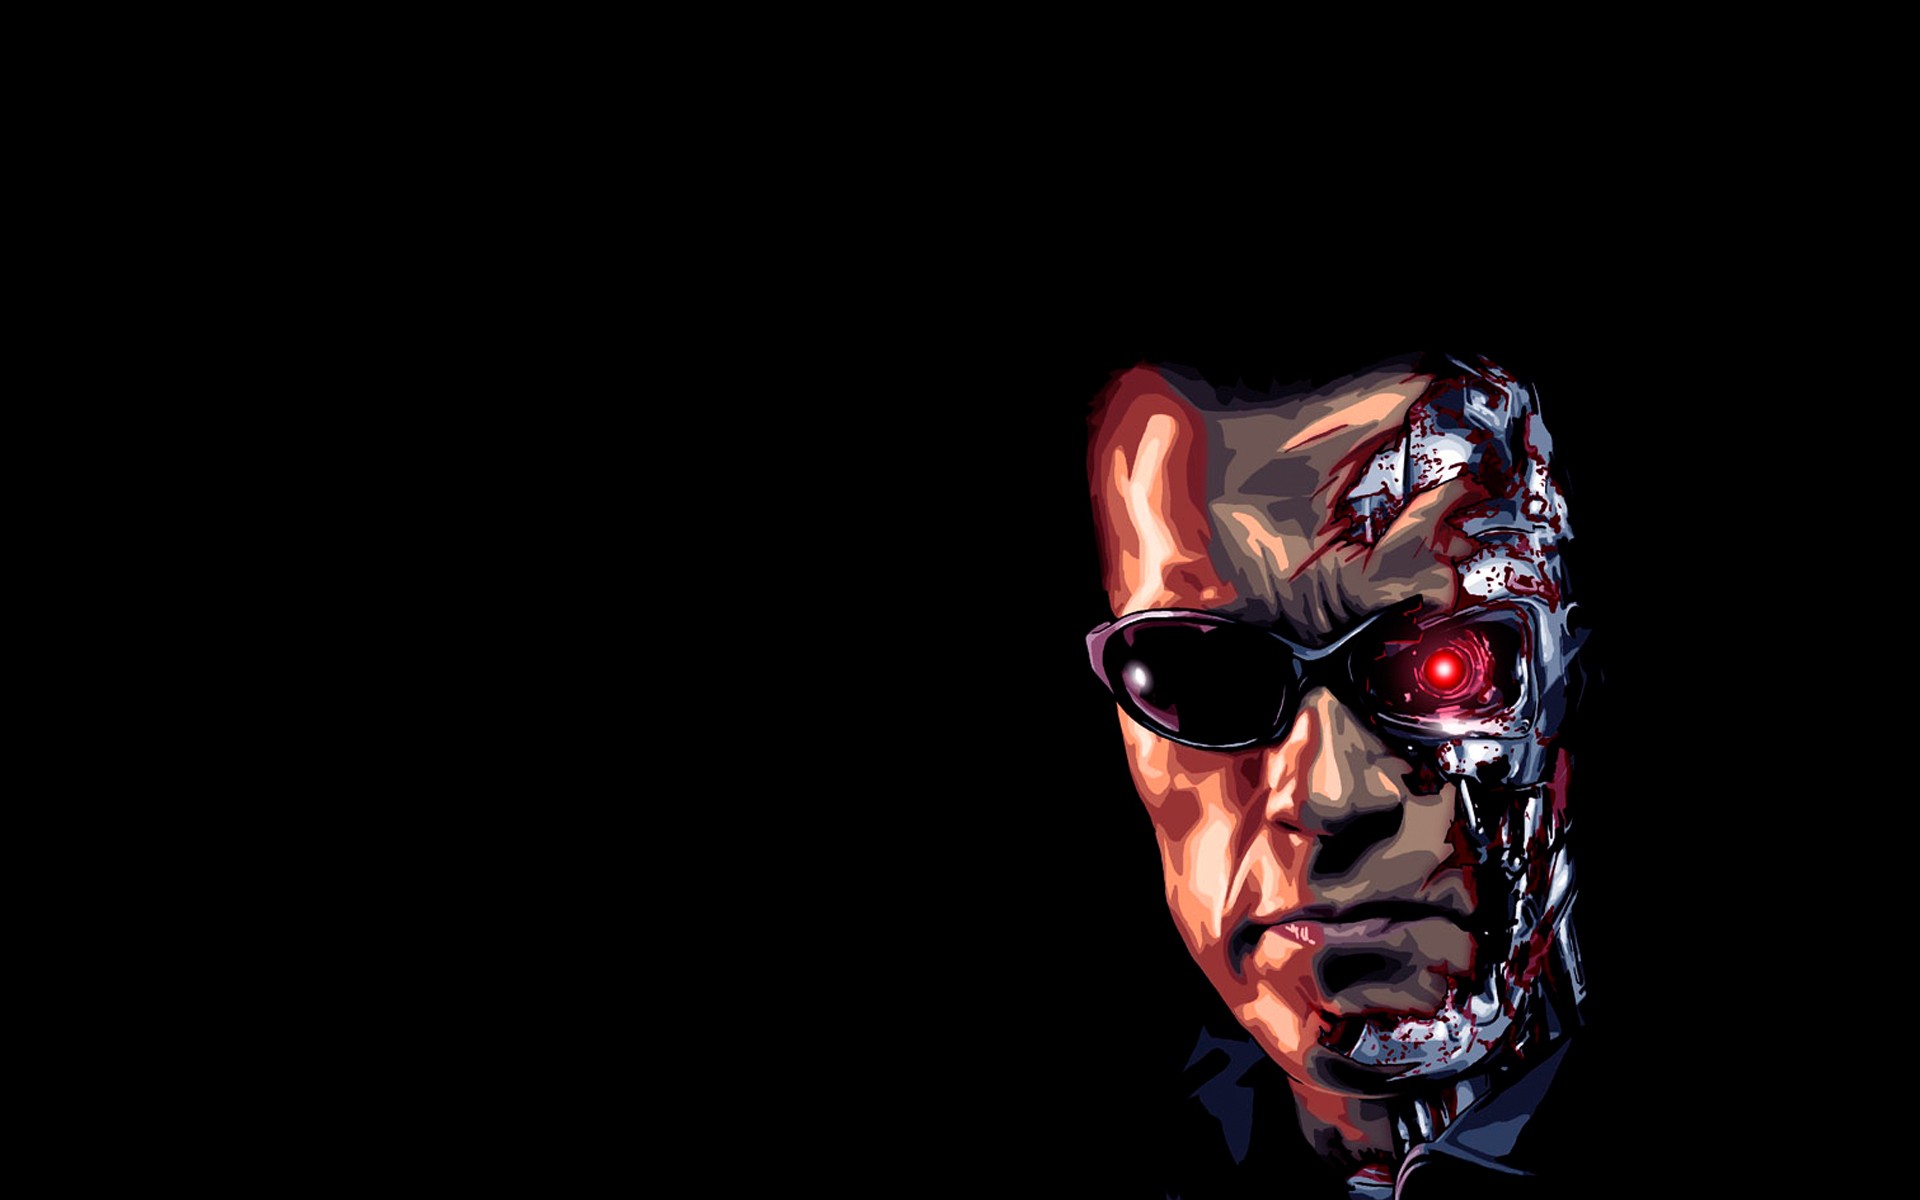 General 1920x1200 artwork Terminator movies cyborg Arnold Schwarzenegger men machine simple background red eyes blood sunglasses face actor